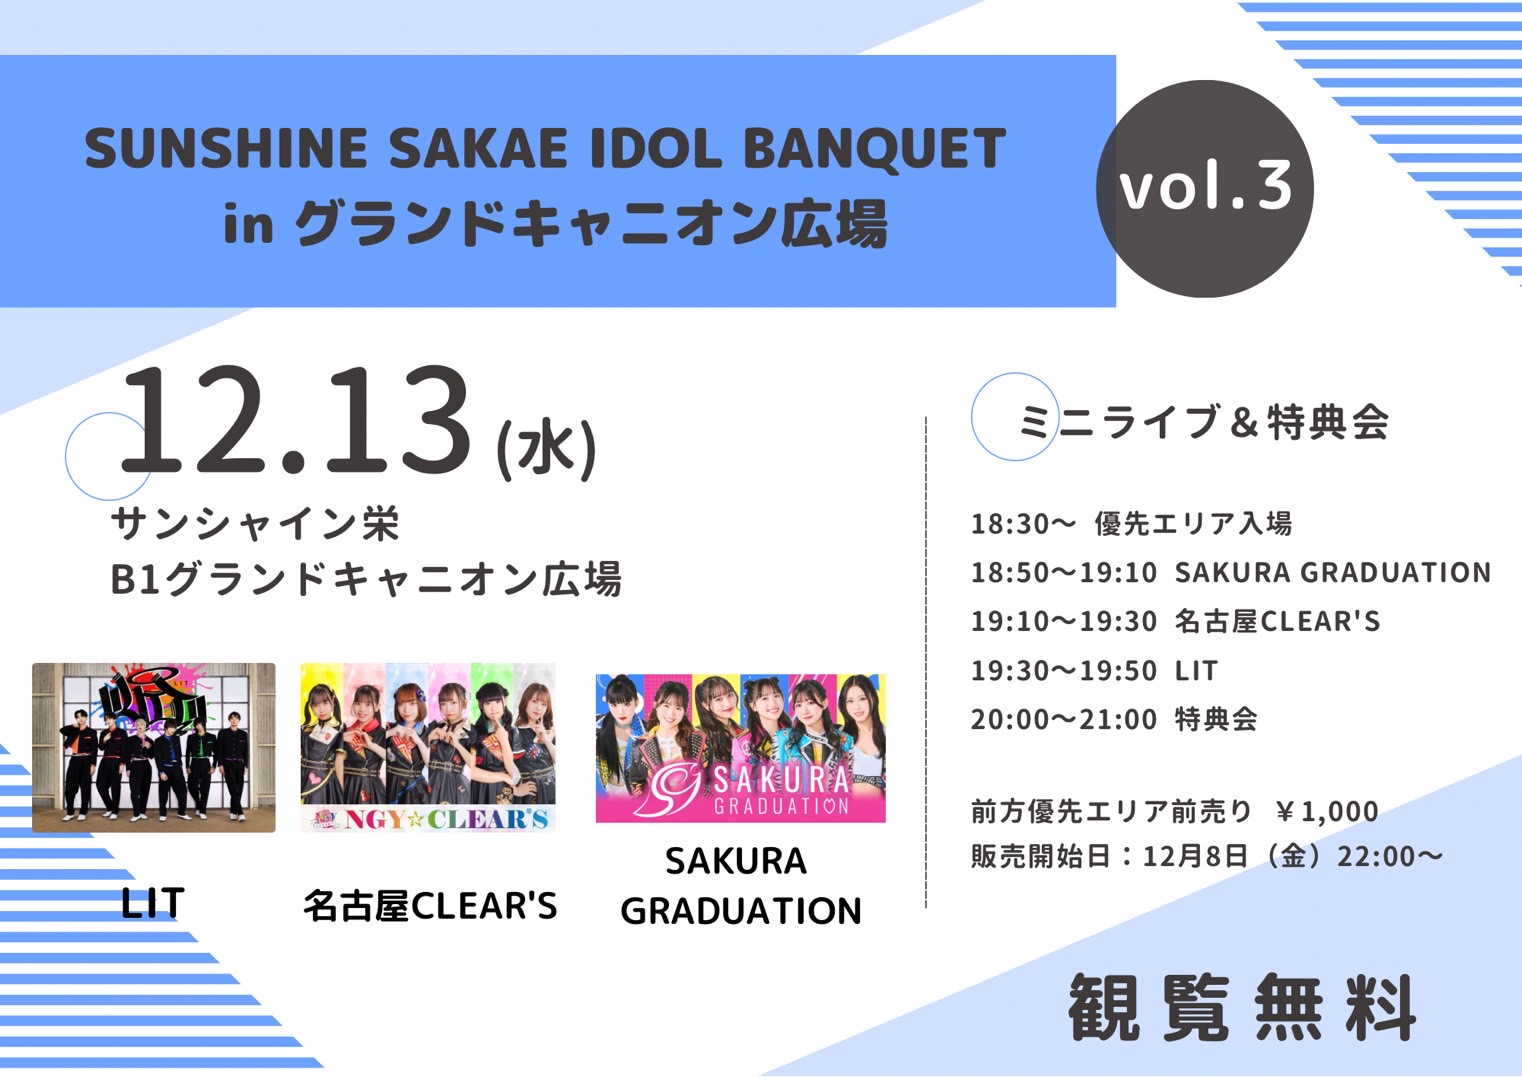 「SUNSHINE SAKAE IDOL BANQUET in グランドキャニオン広場」Vol.3